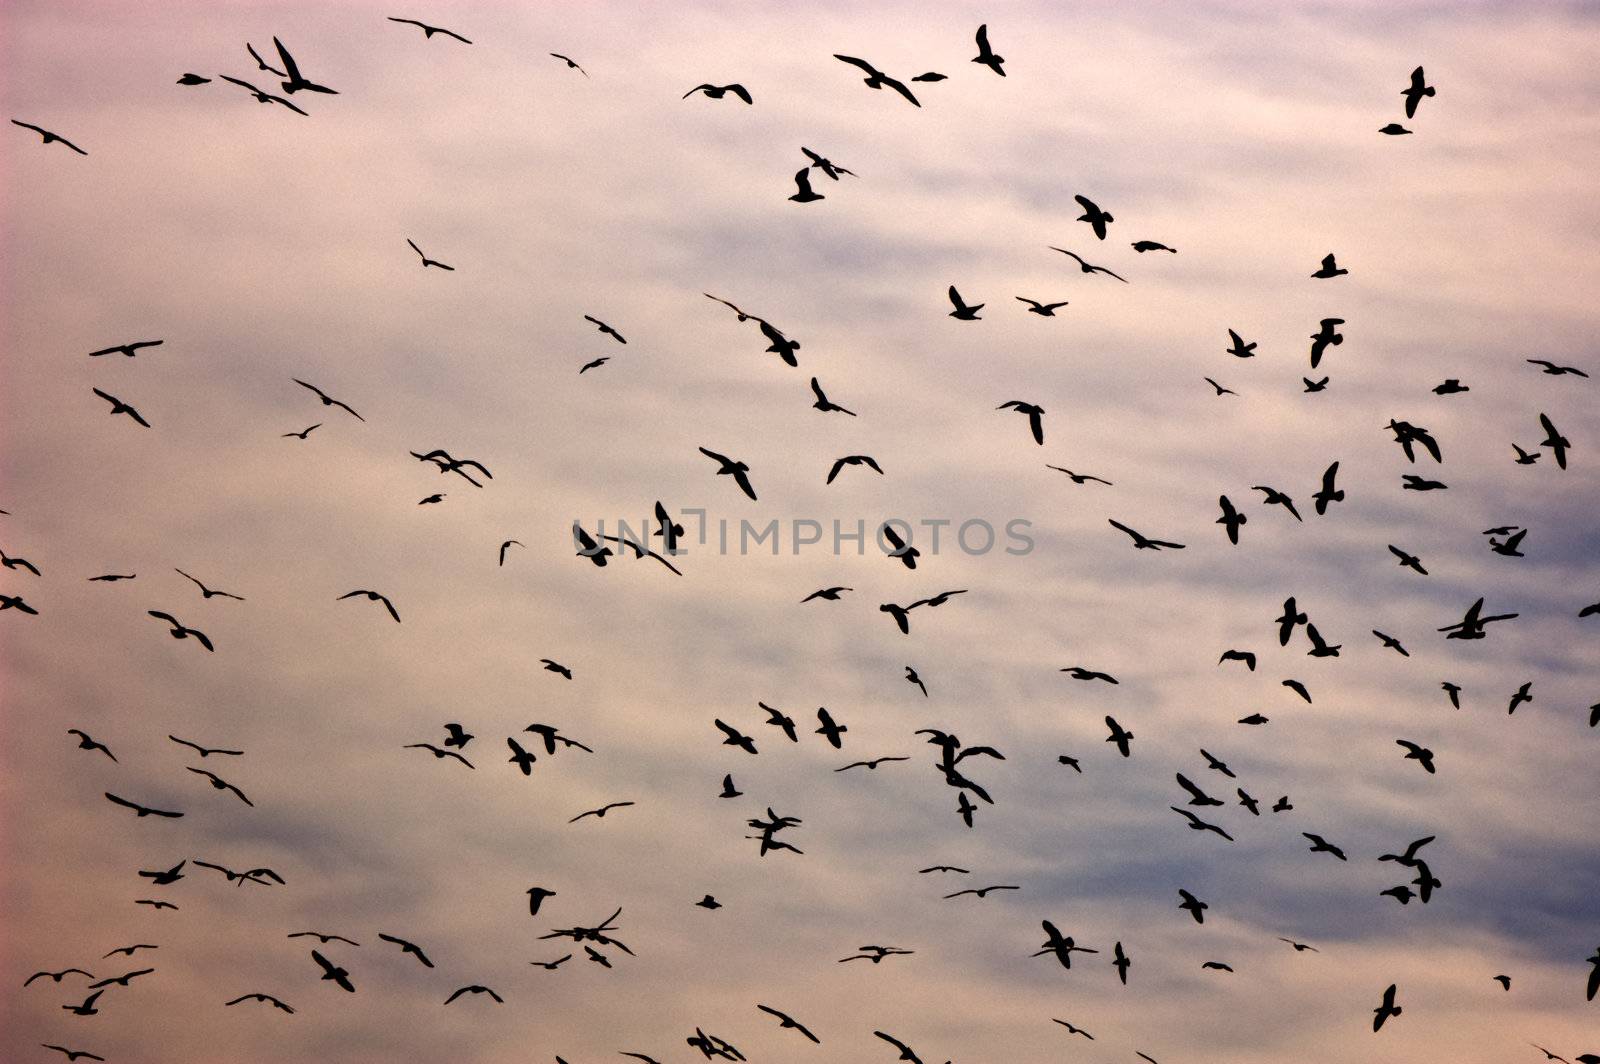 Birds in the sky by lebanmax